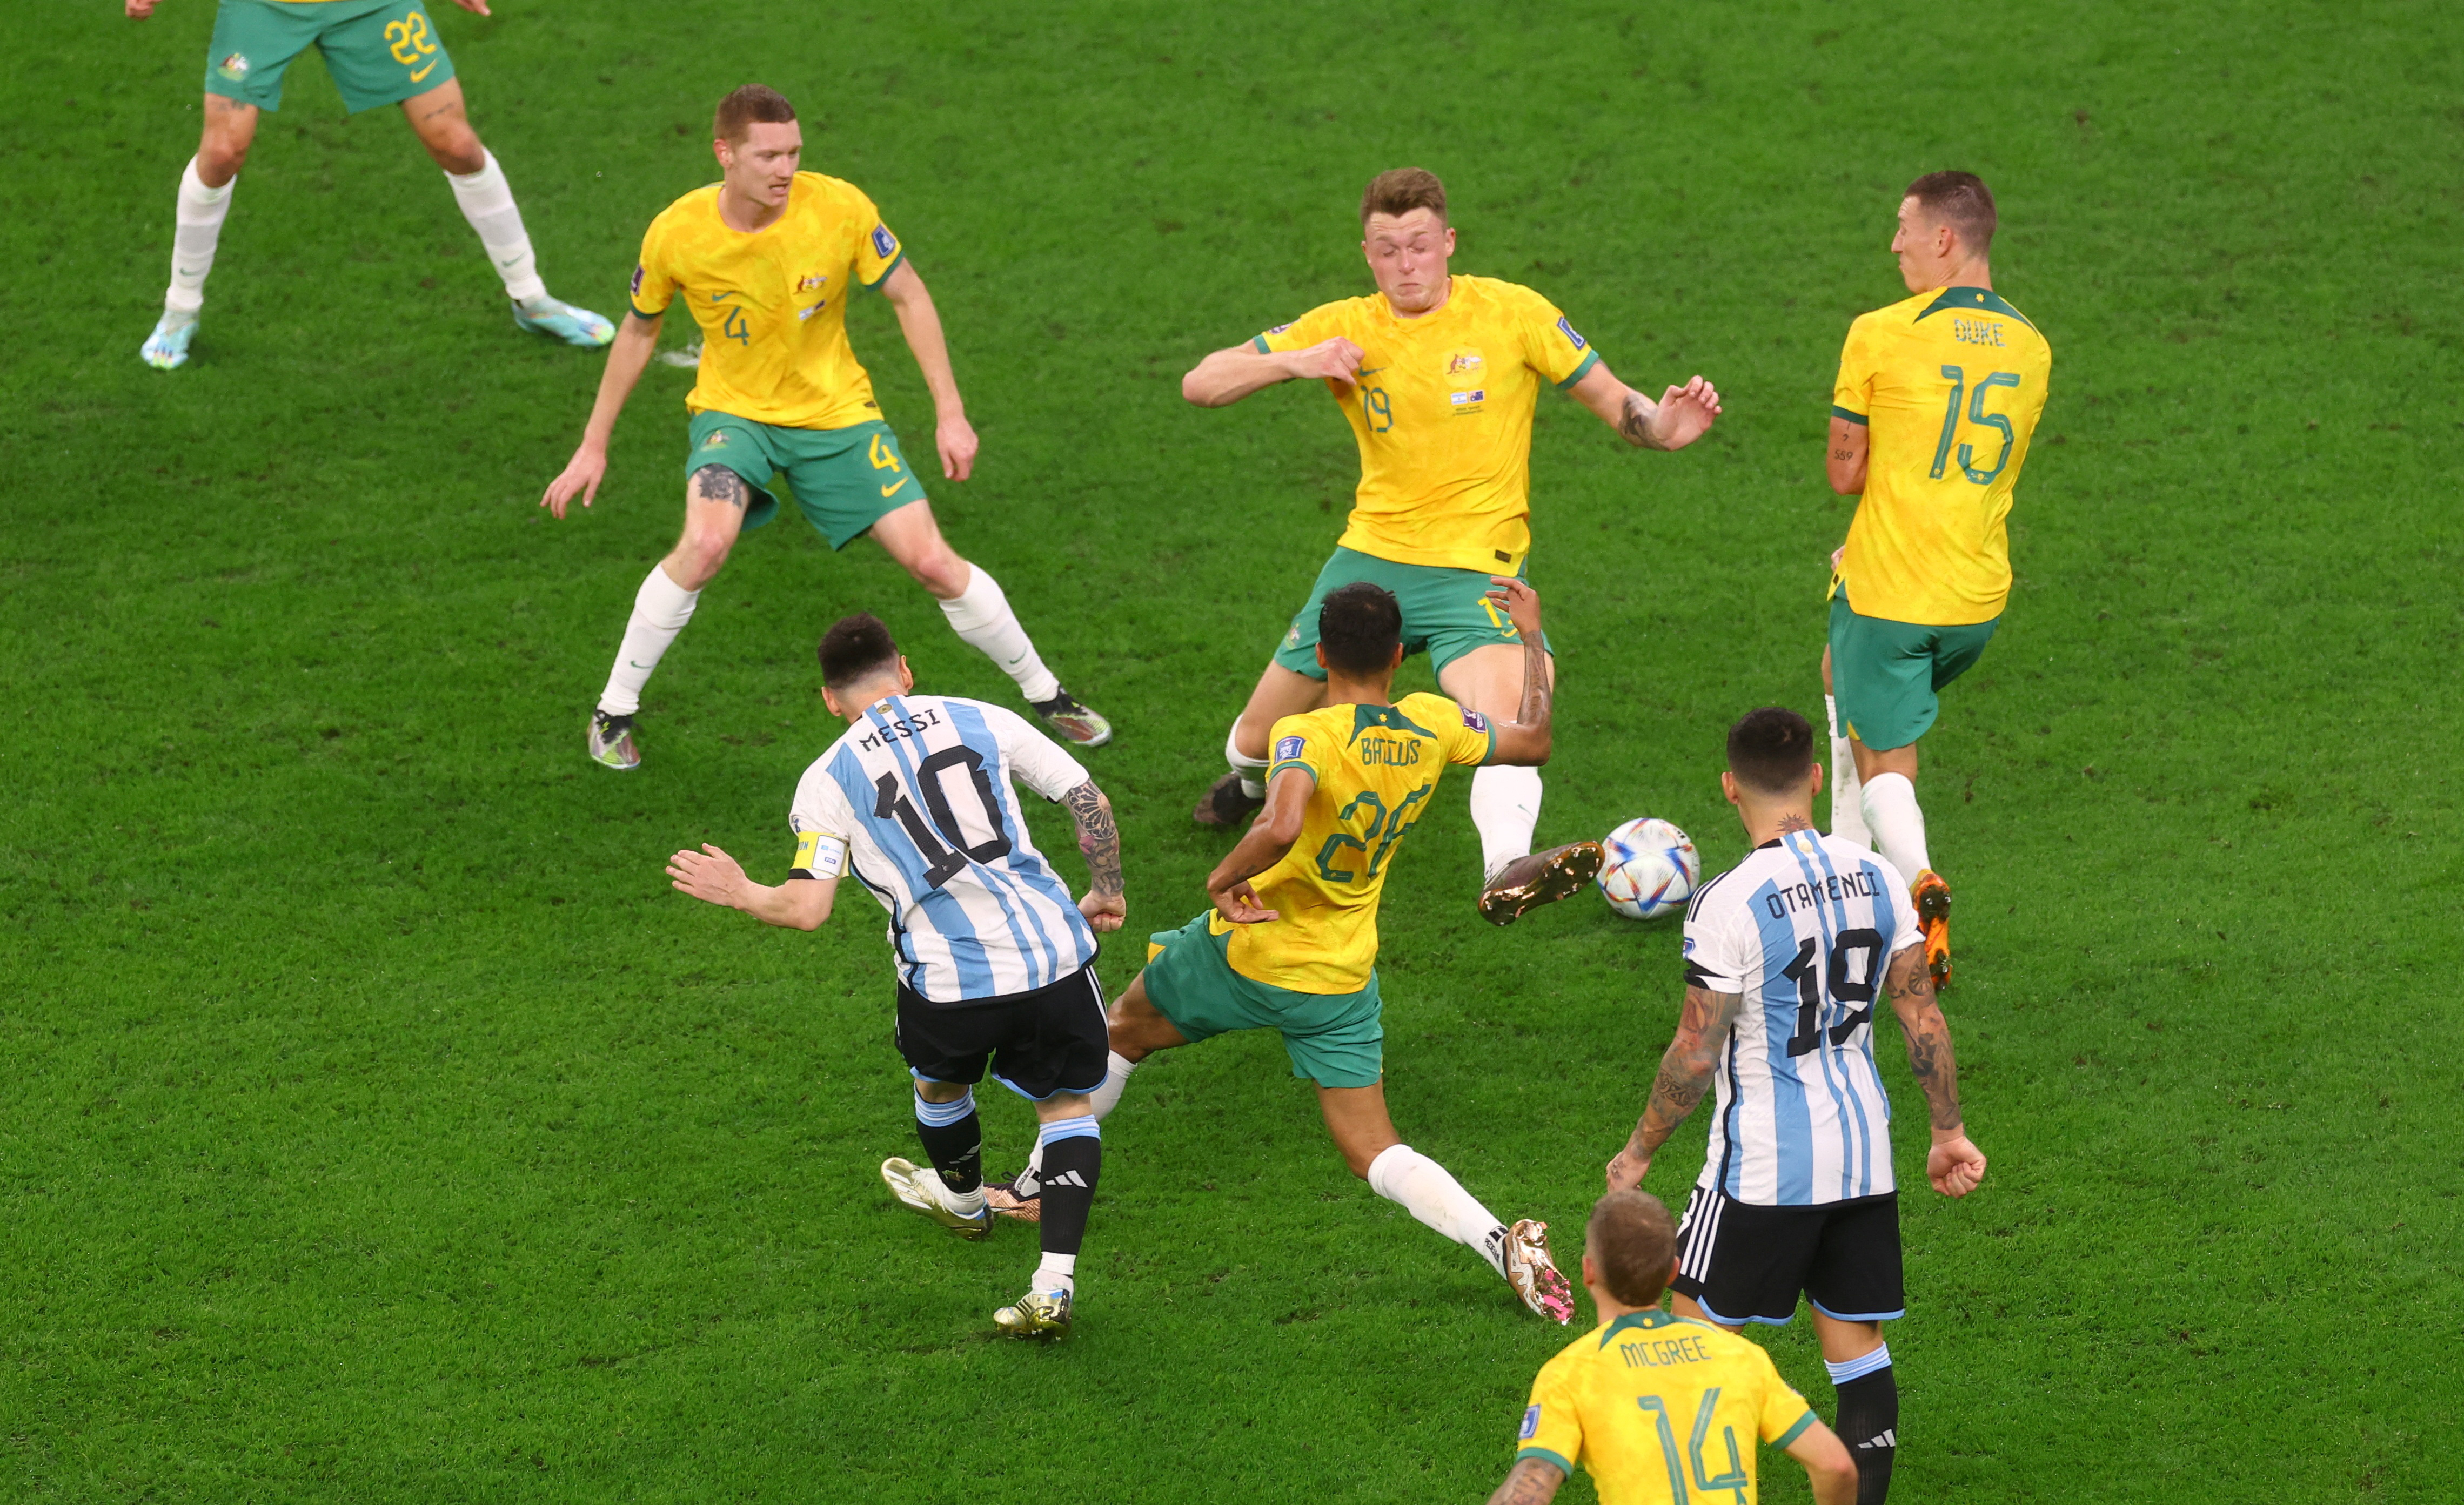 Lionel Messi define entre las piernas de cinco defensores australianos  (REUTERS/Paul Childs)